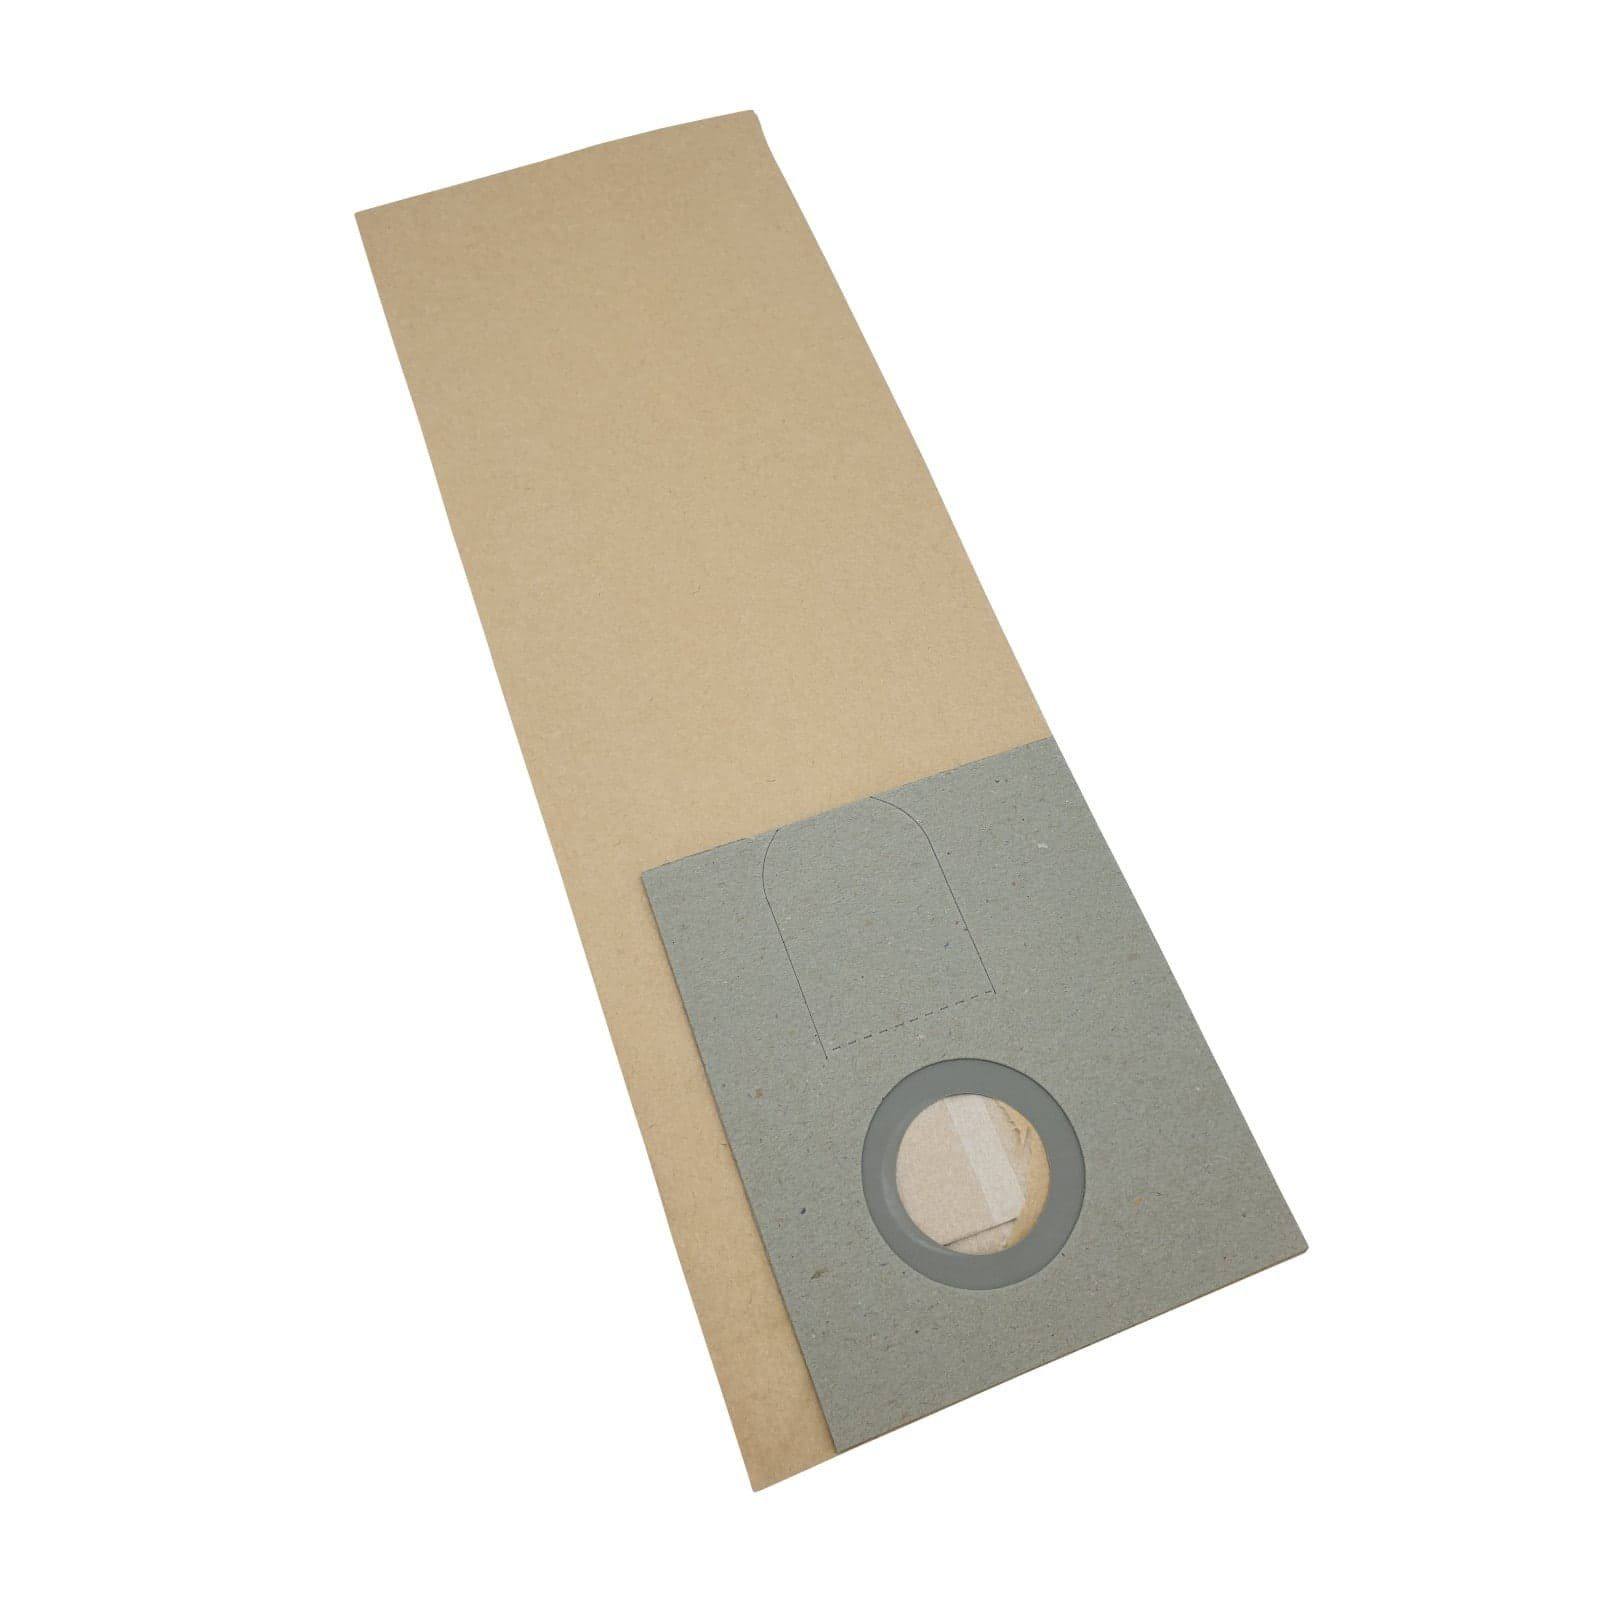 Reinica Staubsaugerbeutel passend für Clean a la Card Compacto UP450, 10er-Pack Staubbeutel Saugerbeutel Beutel Filtertüten